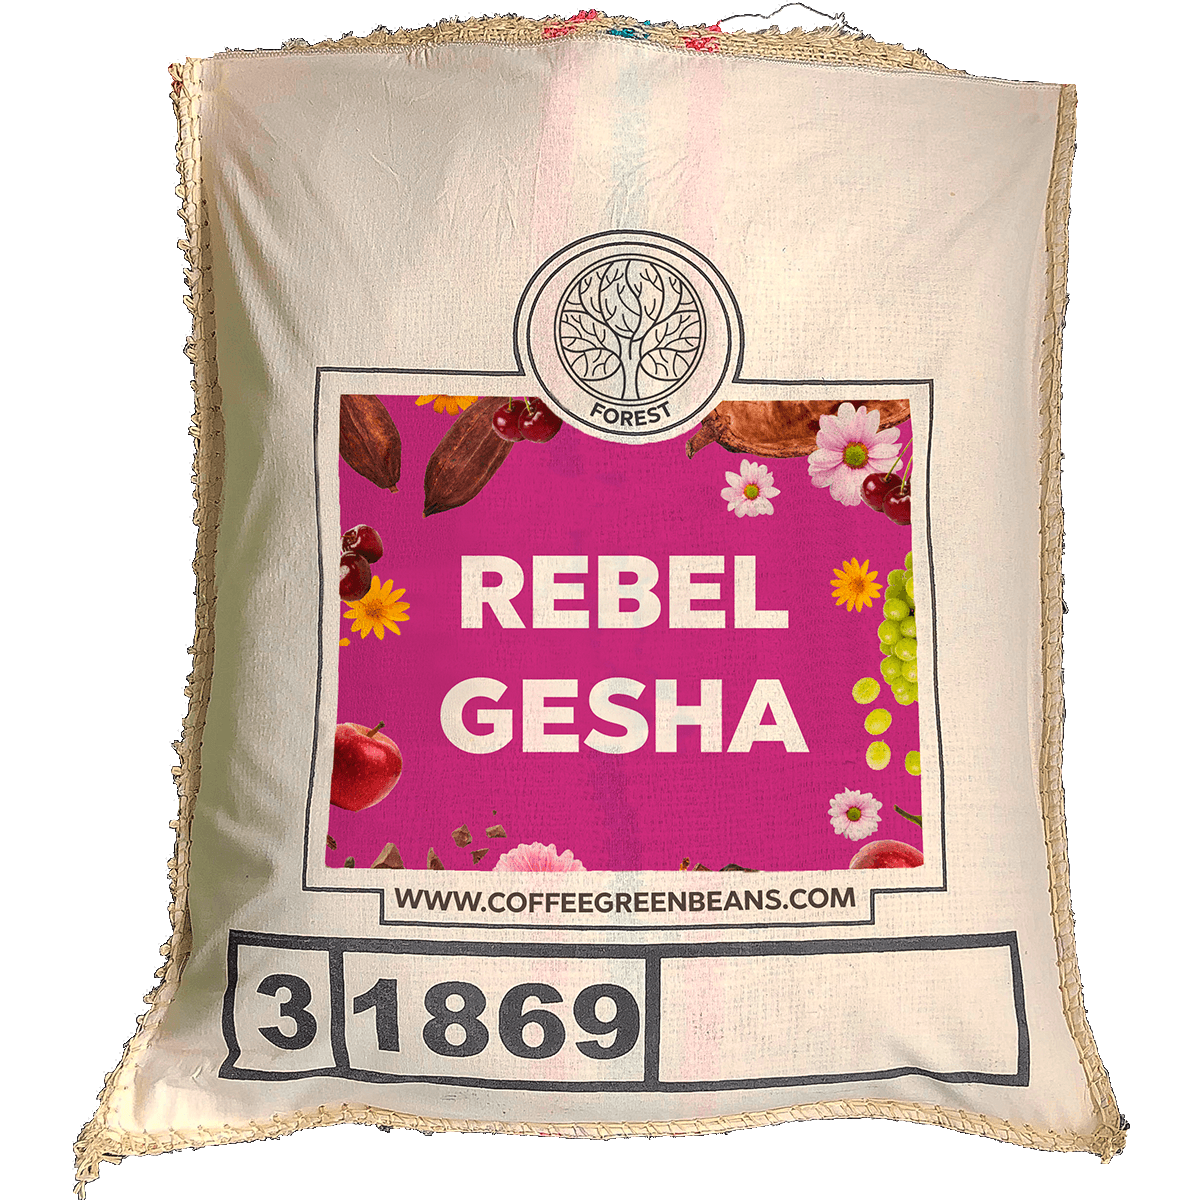 REBEL GESHA - Forest Coffee 